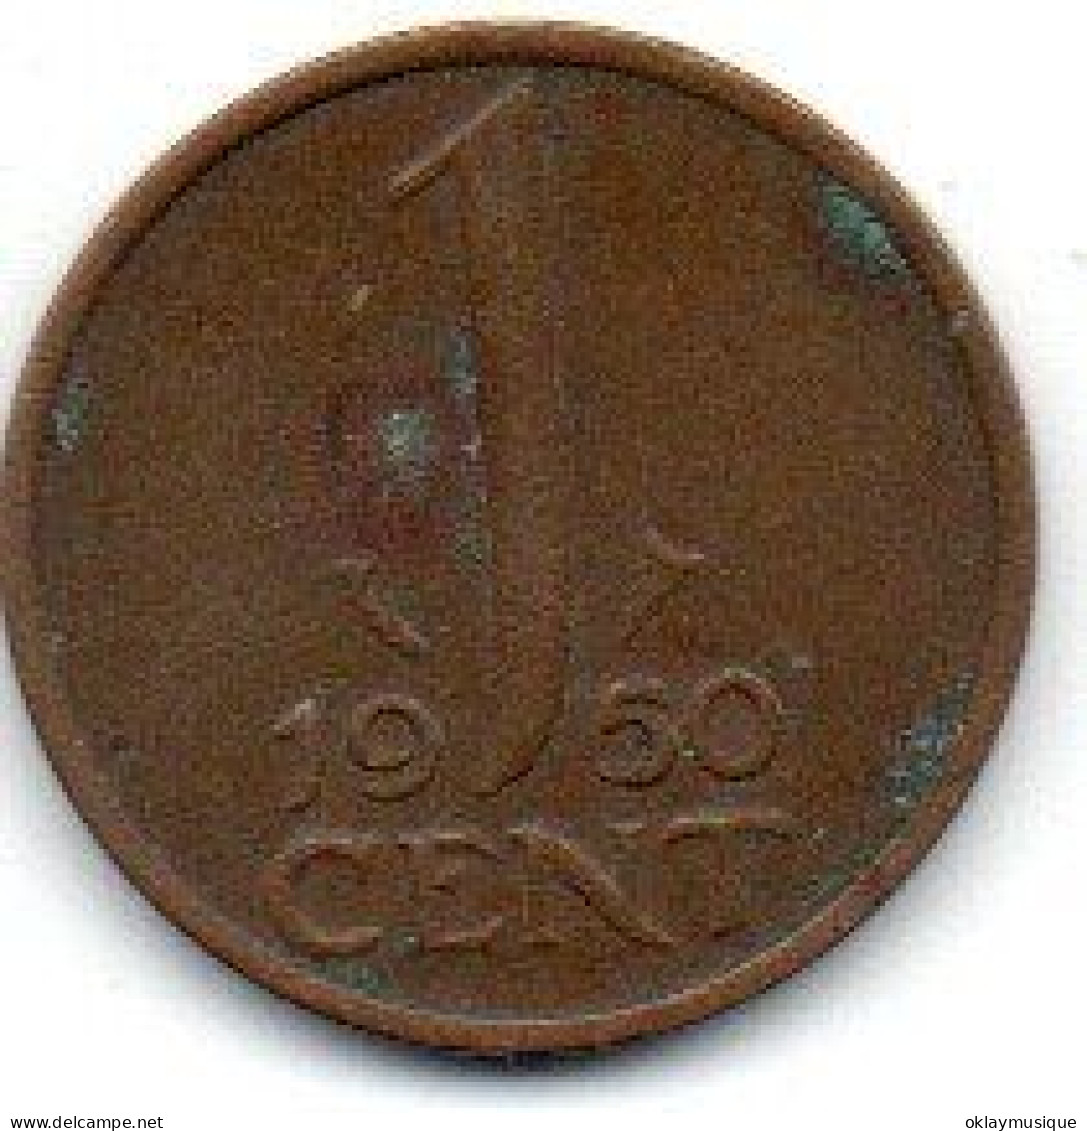 1 Cent 1950 - 1948-1980 : Juliana